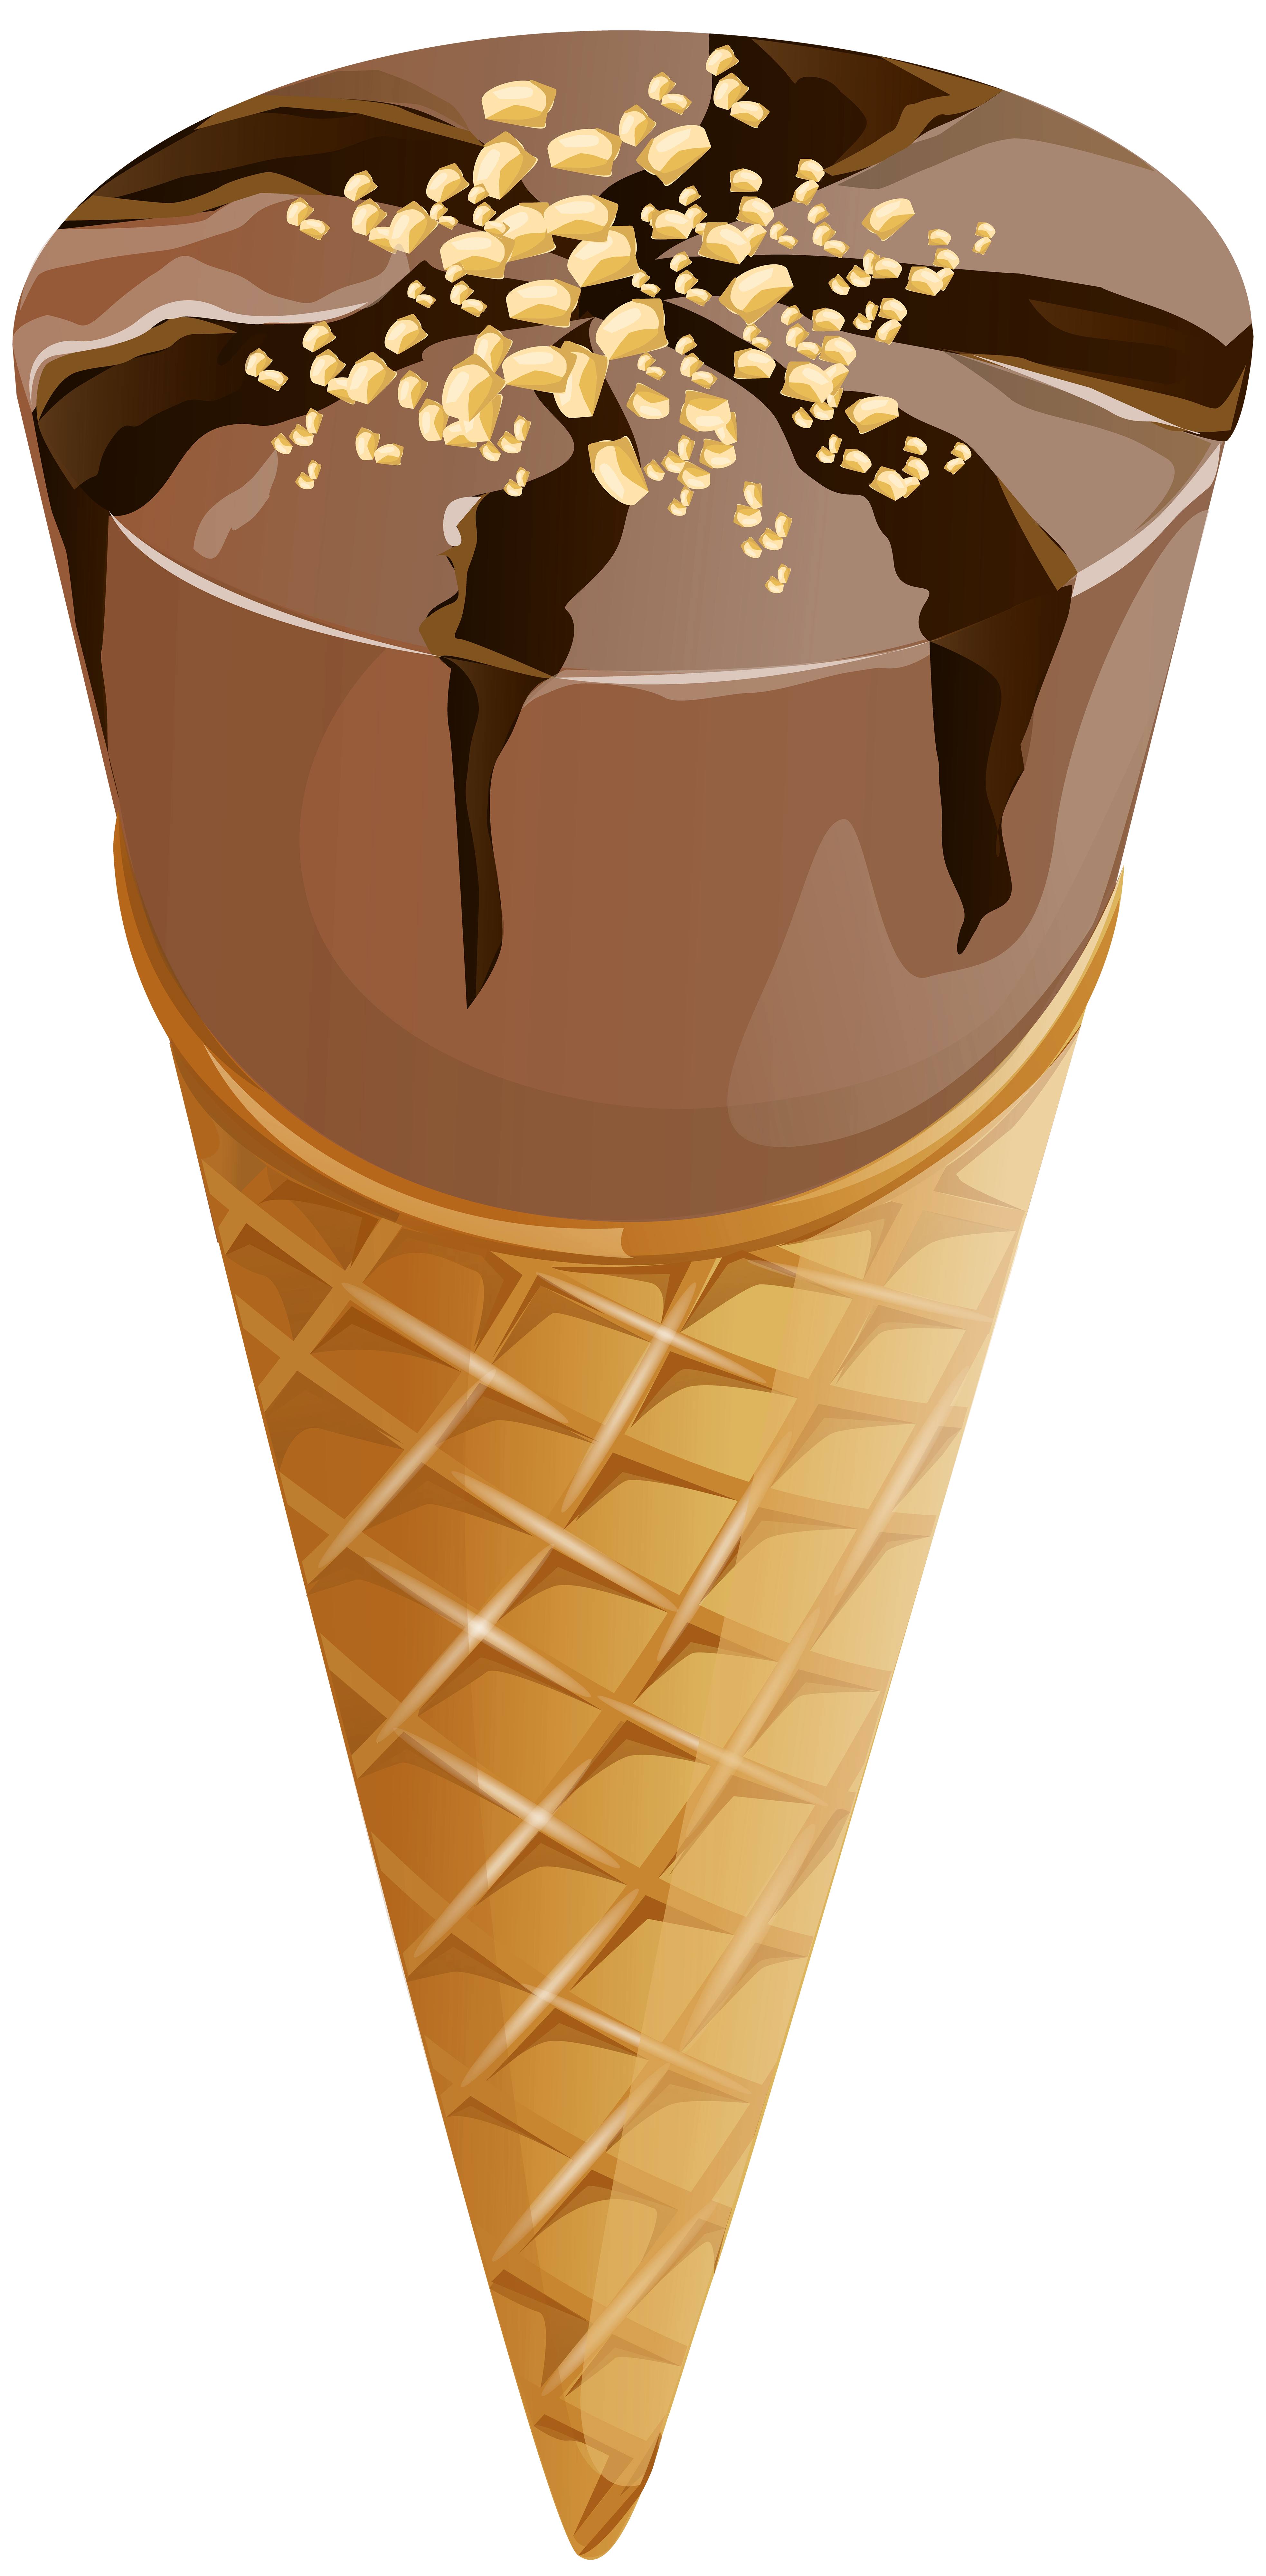 Chocolate Ice Cream Transparent PNG Clip Art Image | Gallery